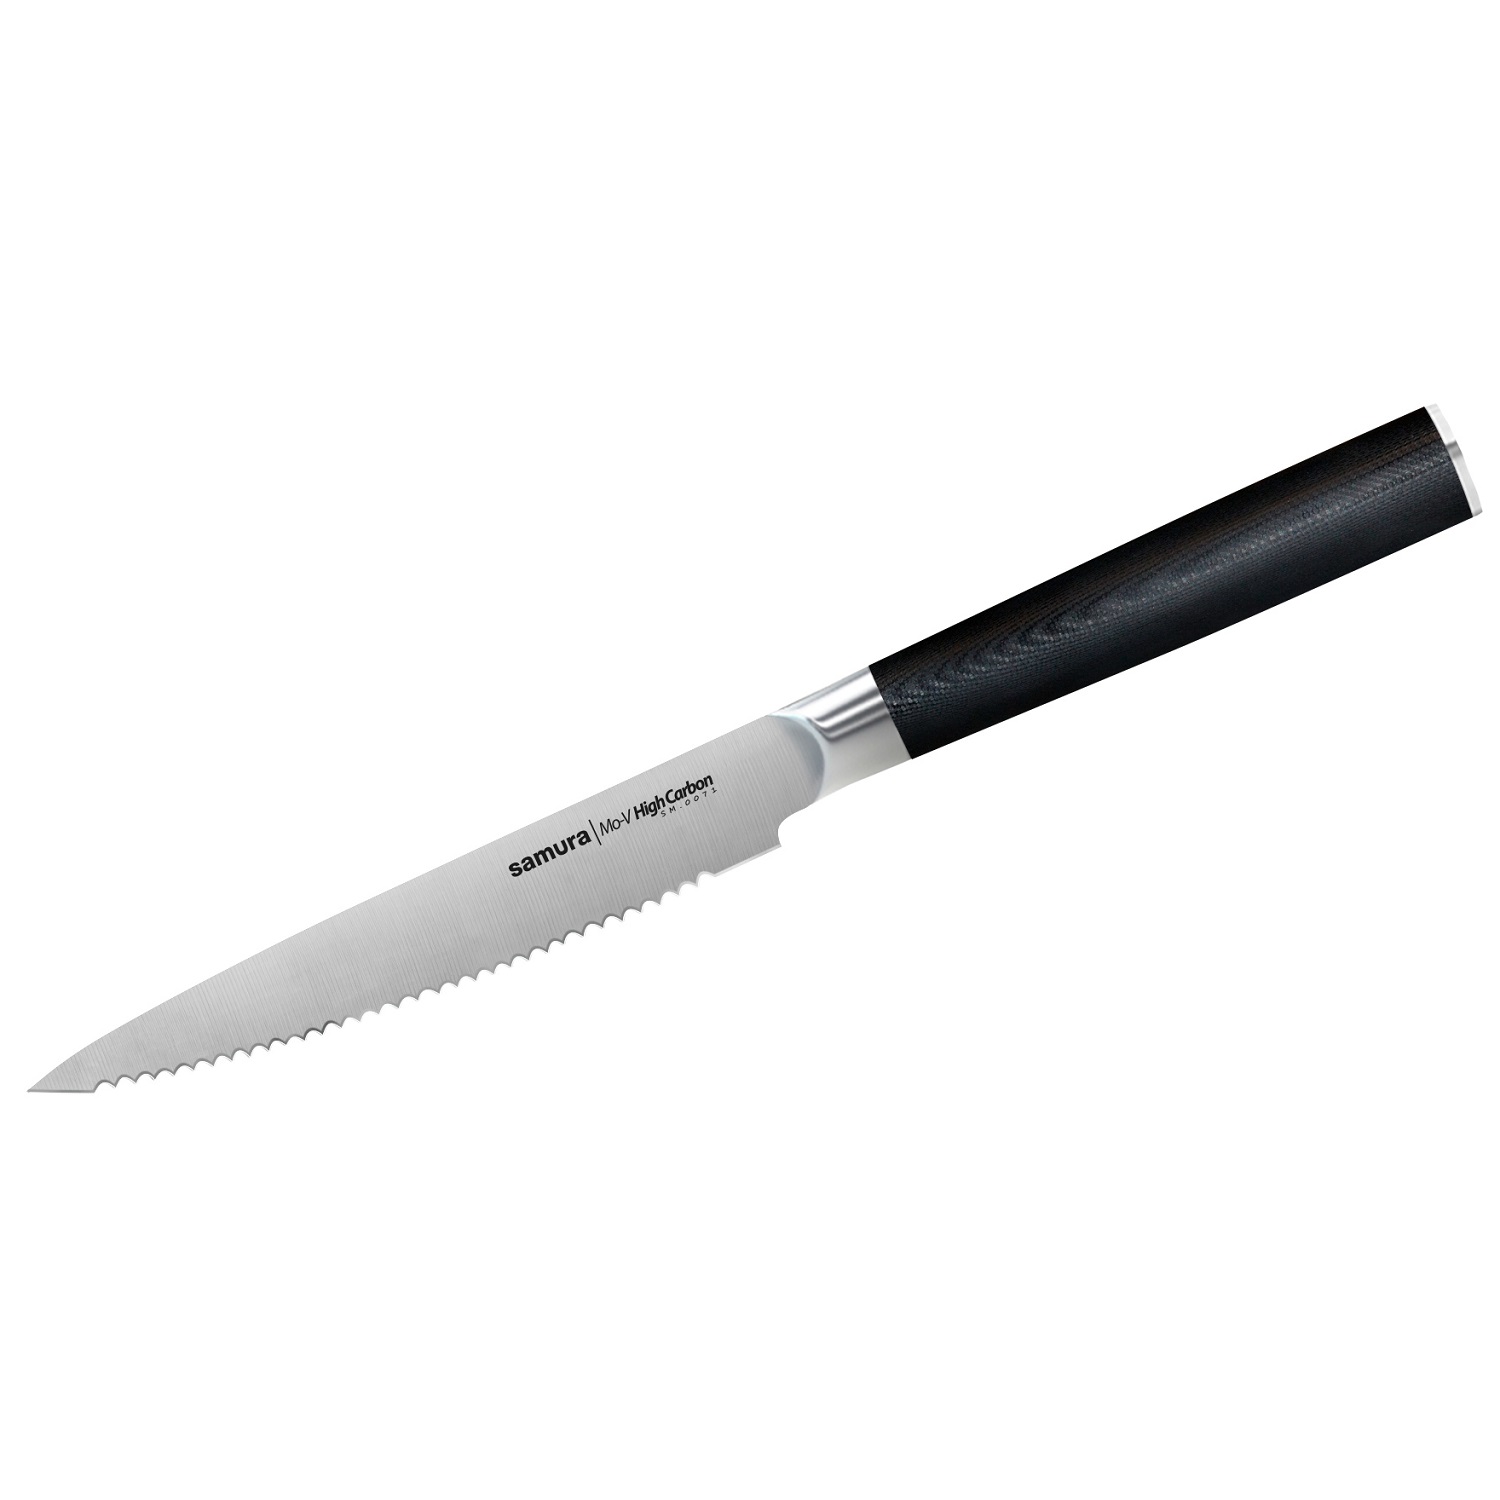 Нож Samura для томатов Mo-V, 12 см, G-10 нож samura овощной mo v 9 см g 10